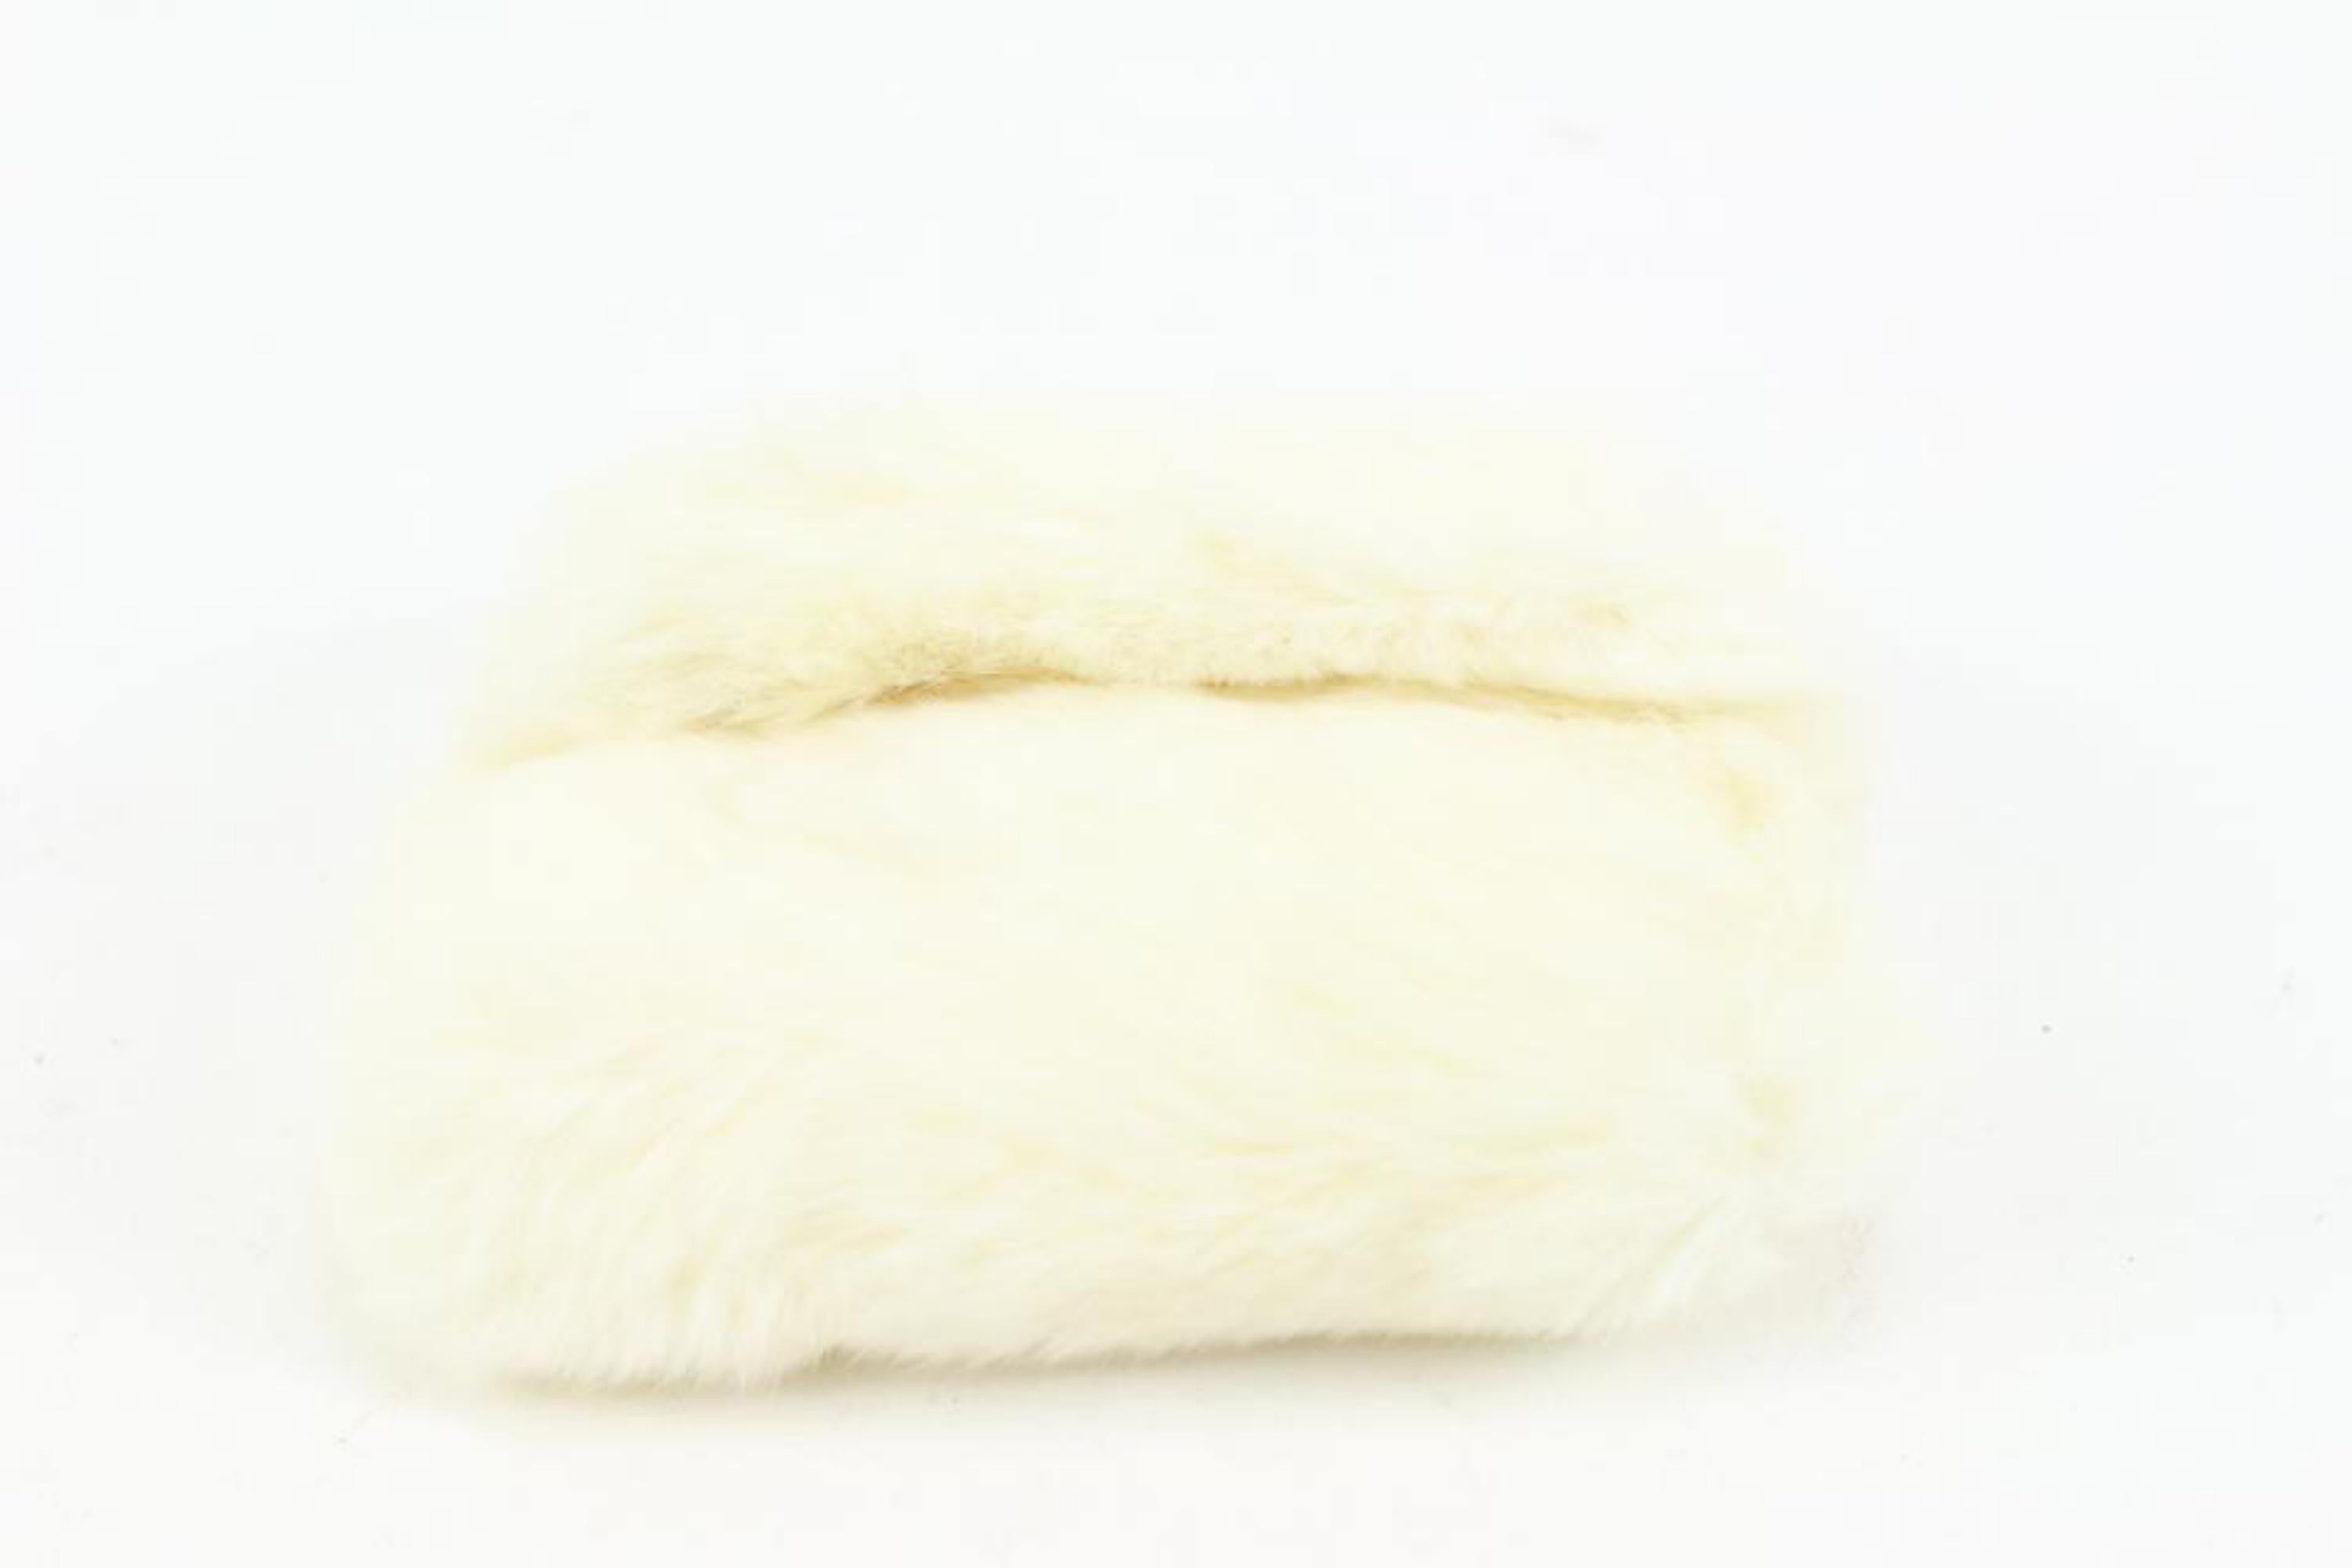 Chanel White x Black CC Rabbit Fur Wrist Band Bracelet s331ck41 For Sale 2